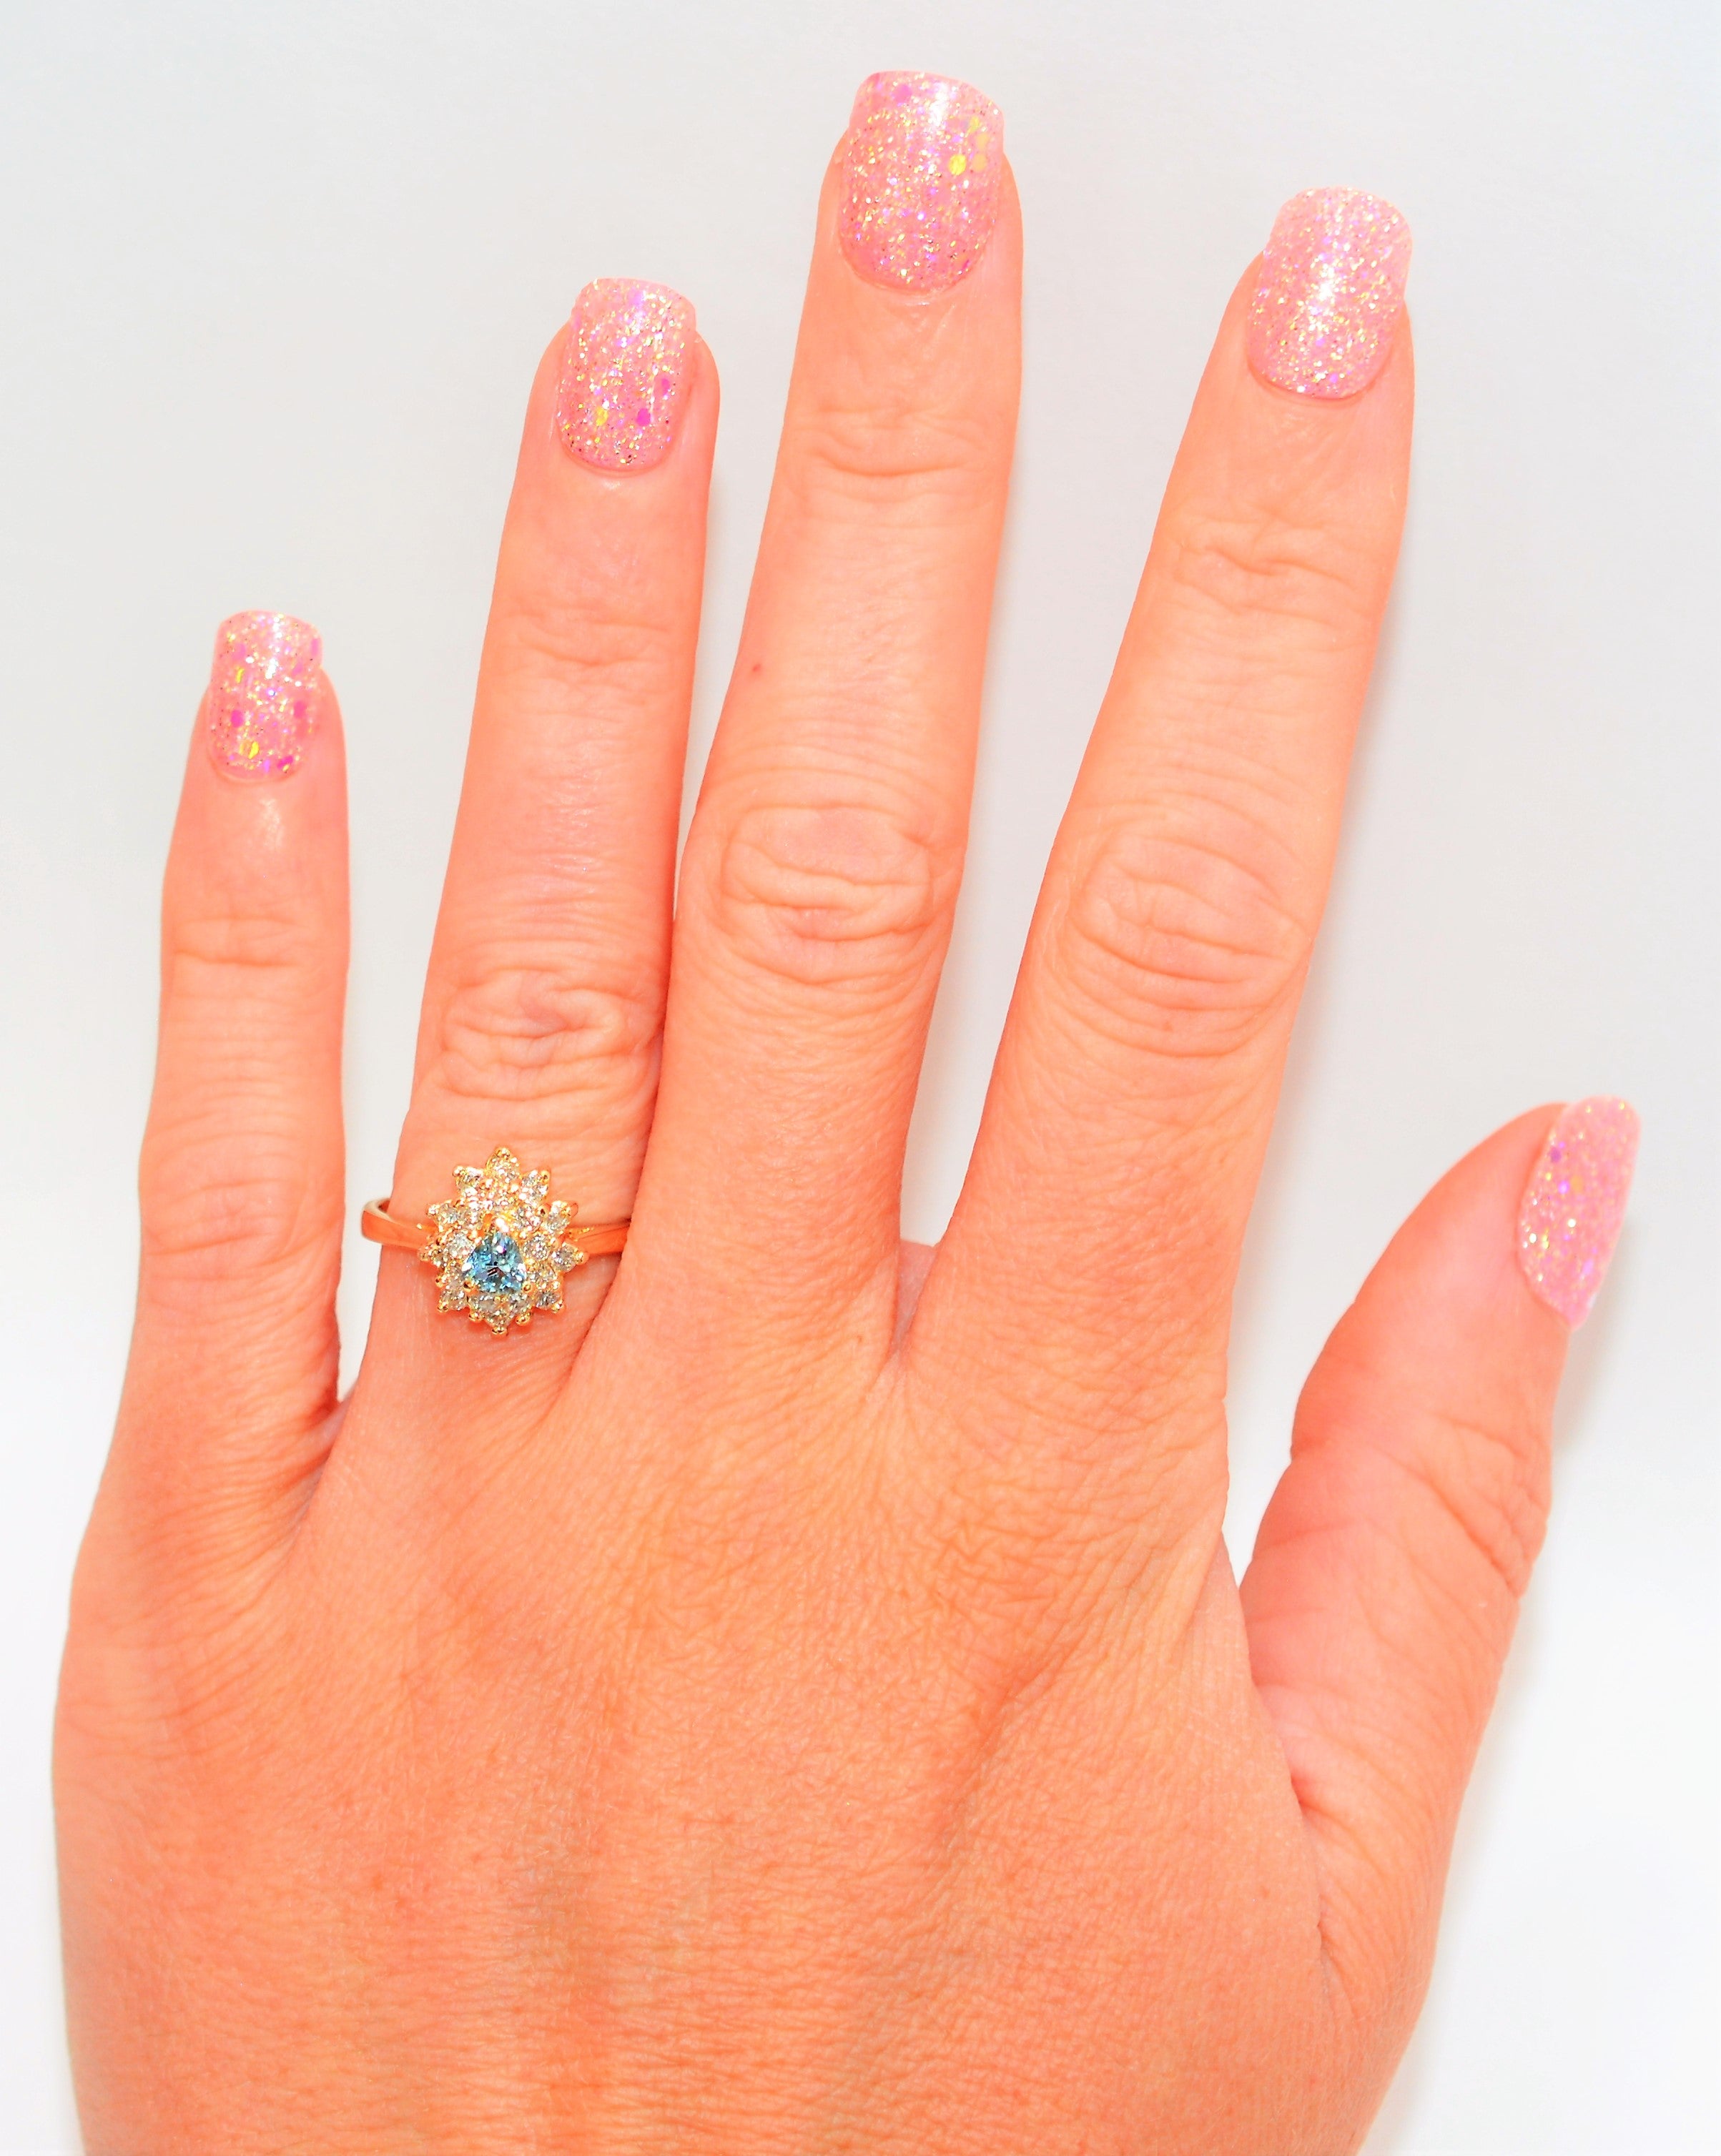 Natural Paraiba Tourmaline & Diamond Ring 14K Solid Gold .65tcw Fine Gemstone Trillion Cut Fine Ladies Jewelry Women's Ring Estate Jewellery